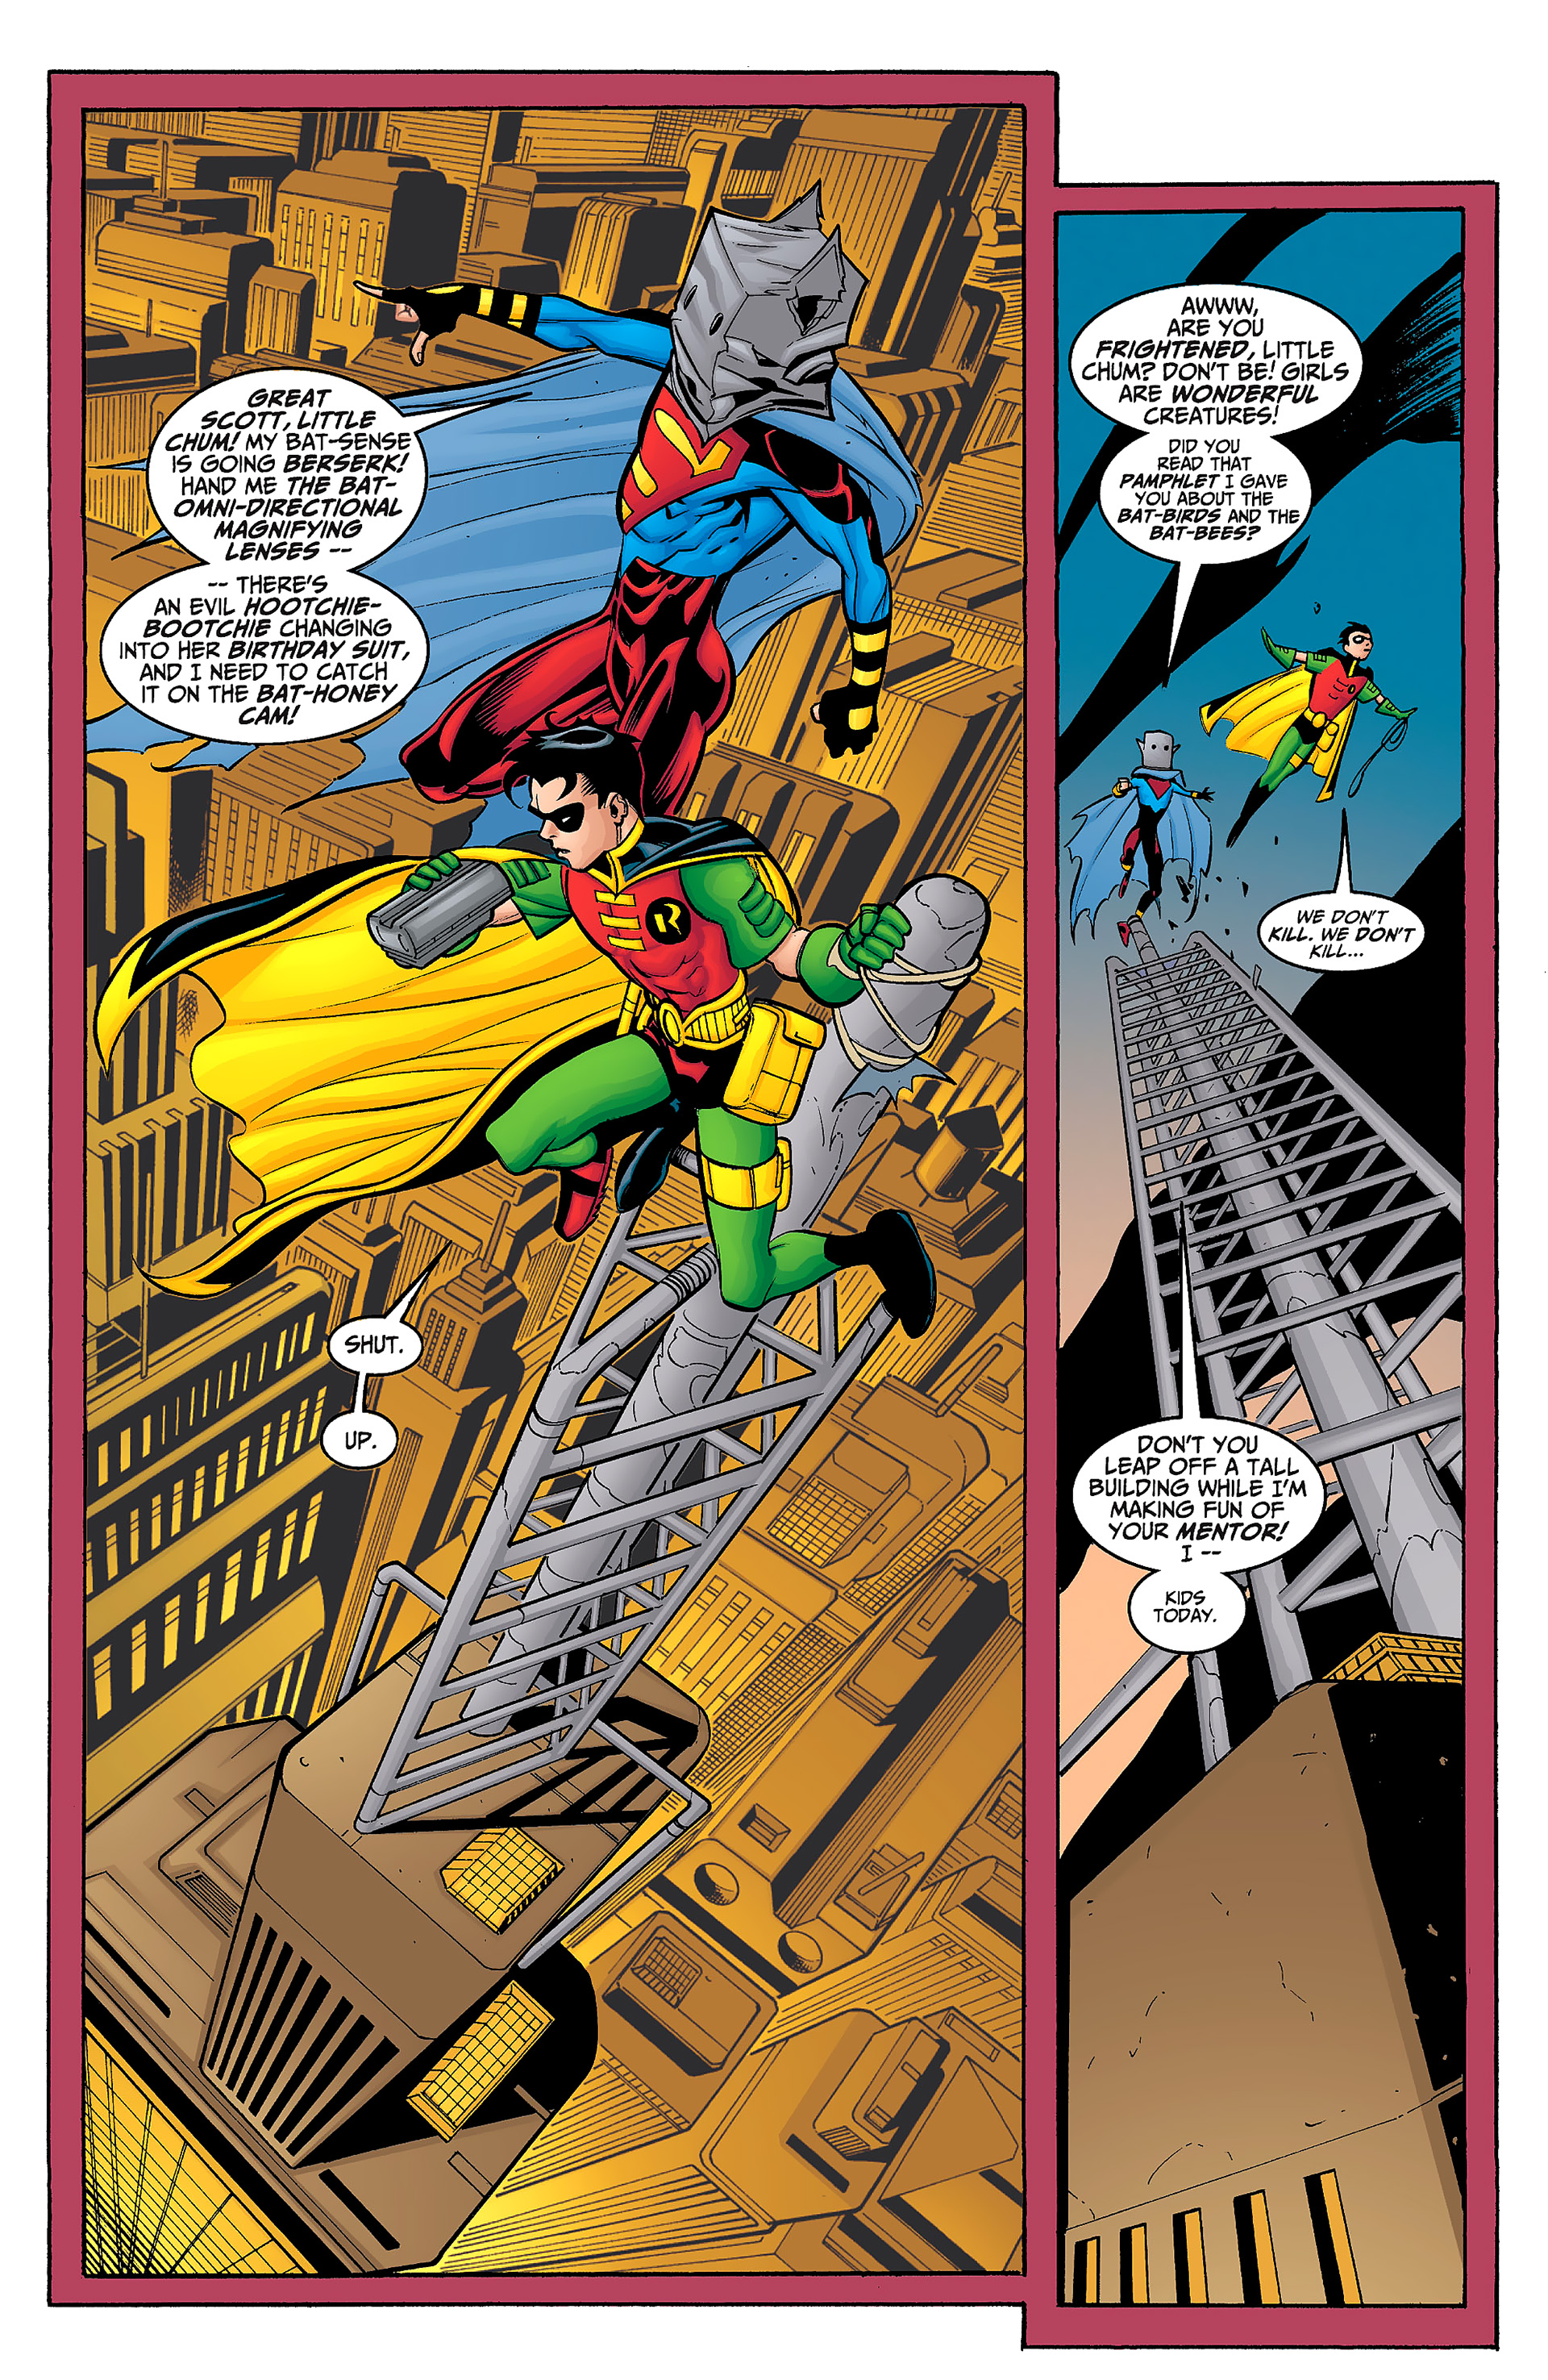 Superboy (1994) 85 Page 1